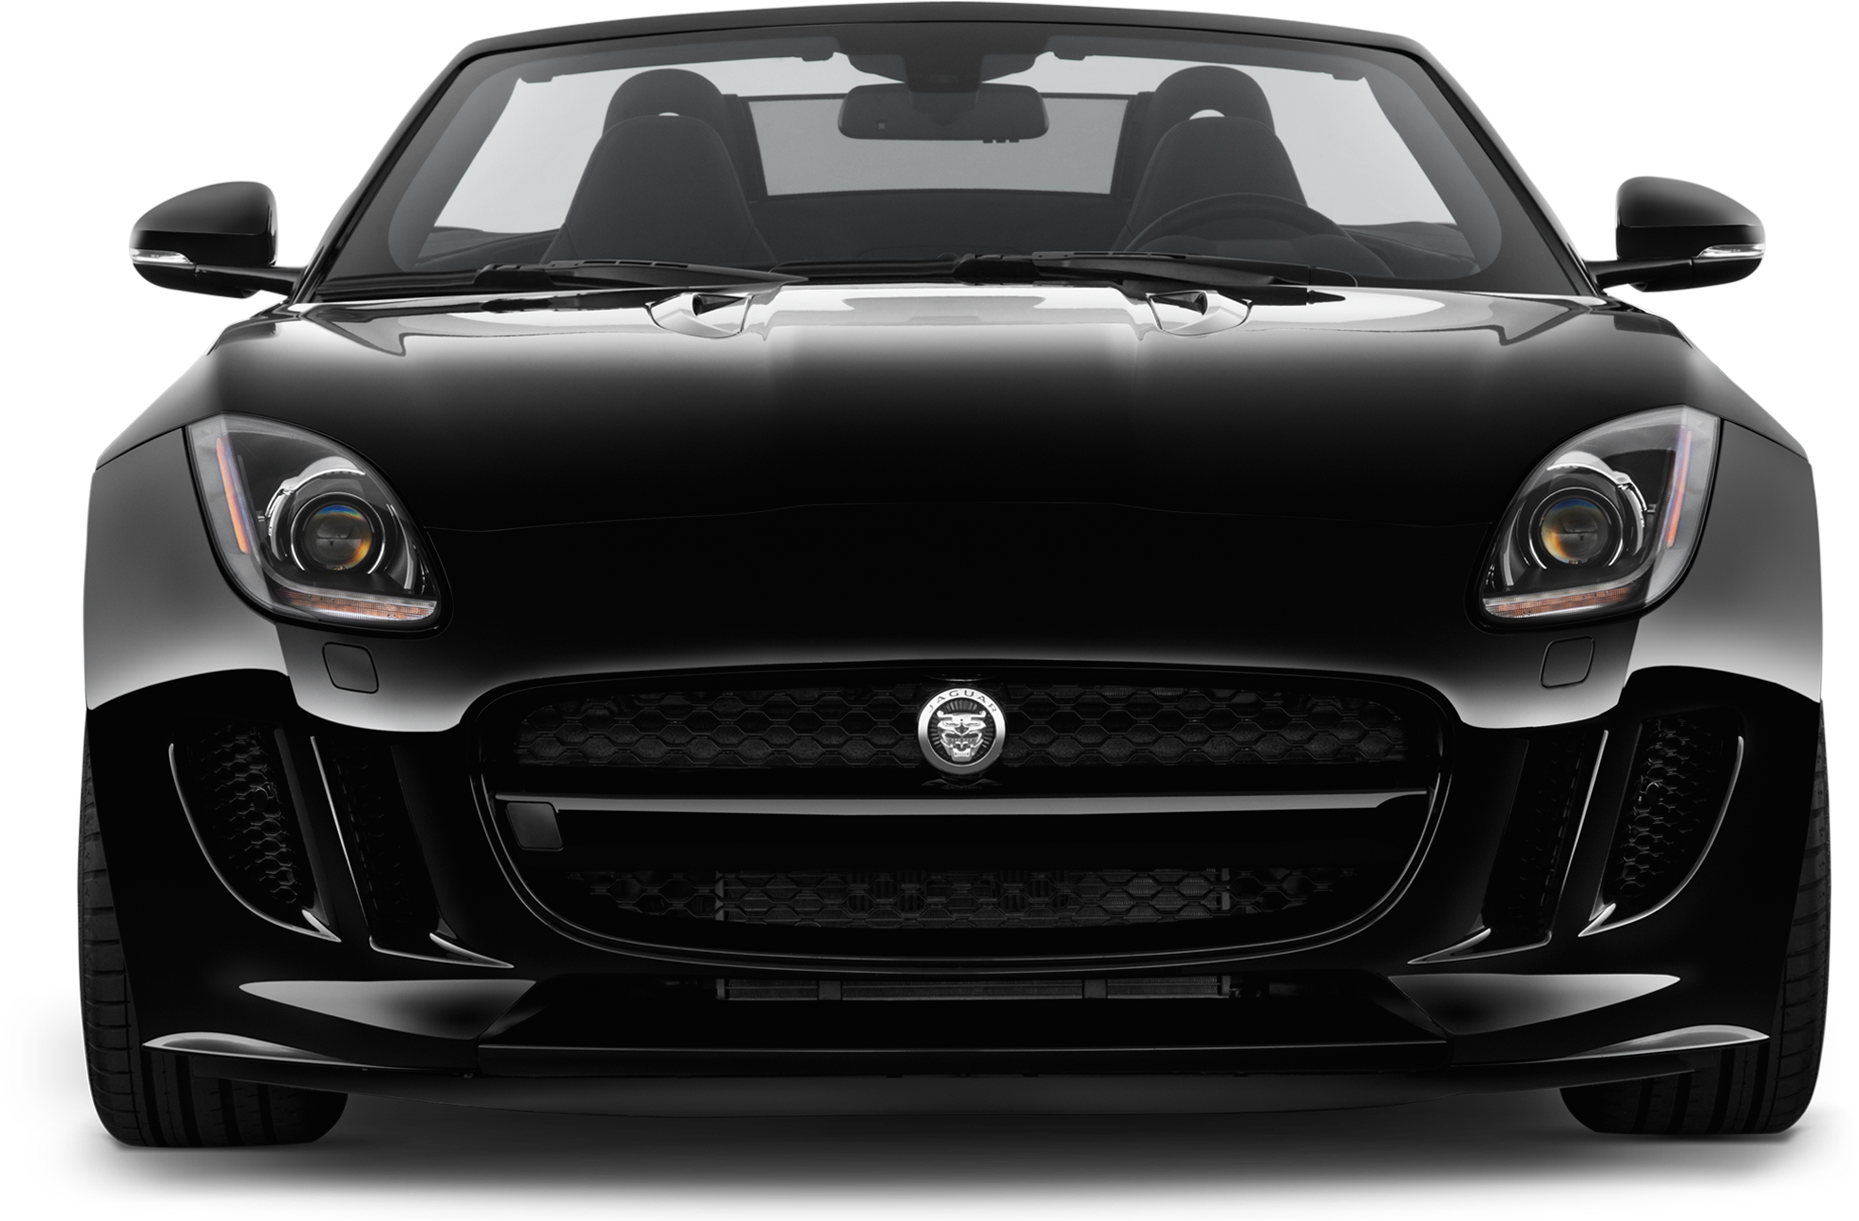 2016 Jaguar F-type Front View - Daihatsu Copen (700x700), Png Download